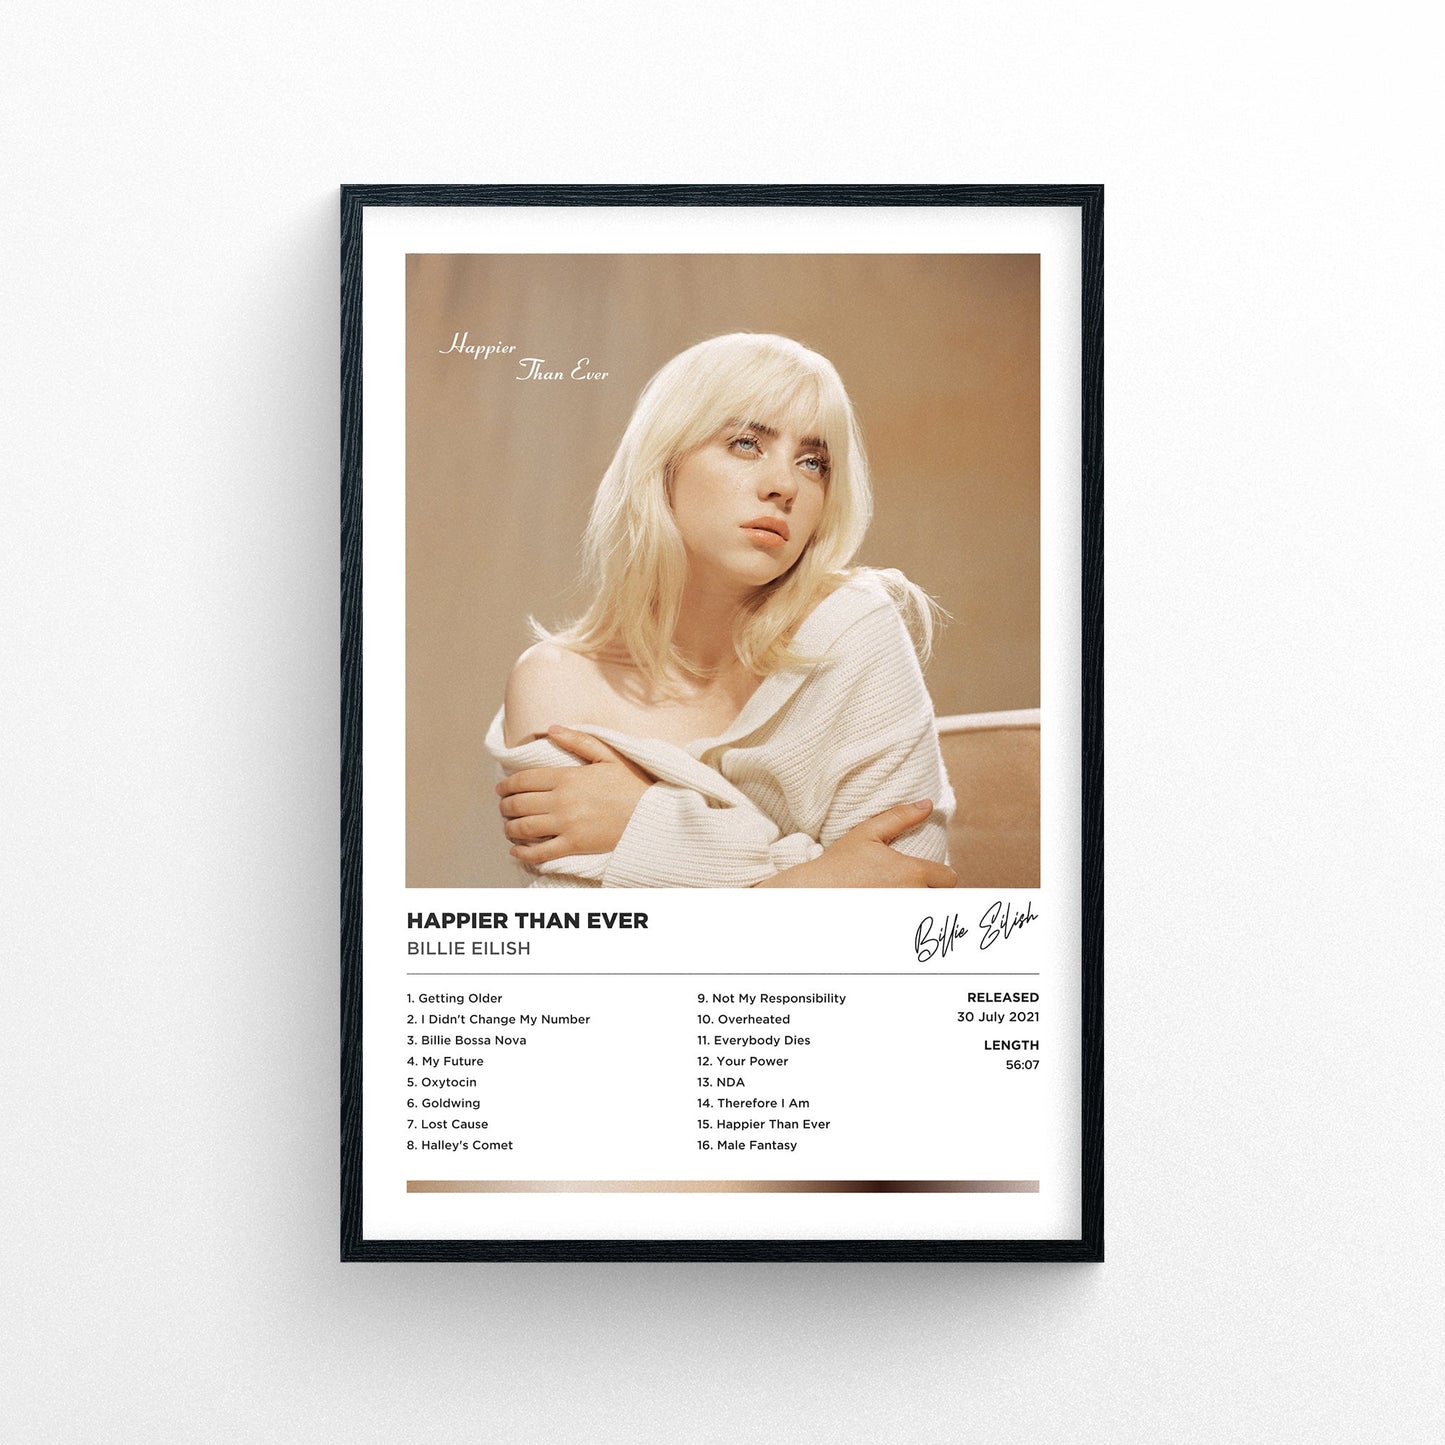 Billie Eilish - Happier Than Ever Framed Poster Print | Polaroid Style | Album Cover Artwork